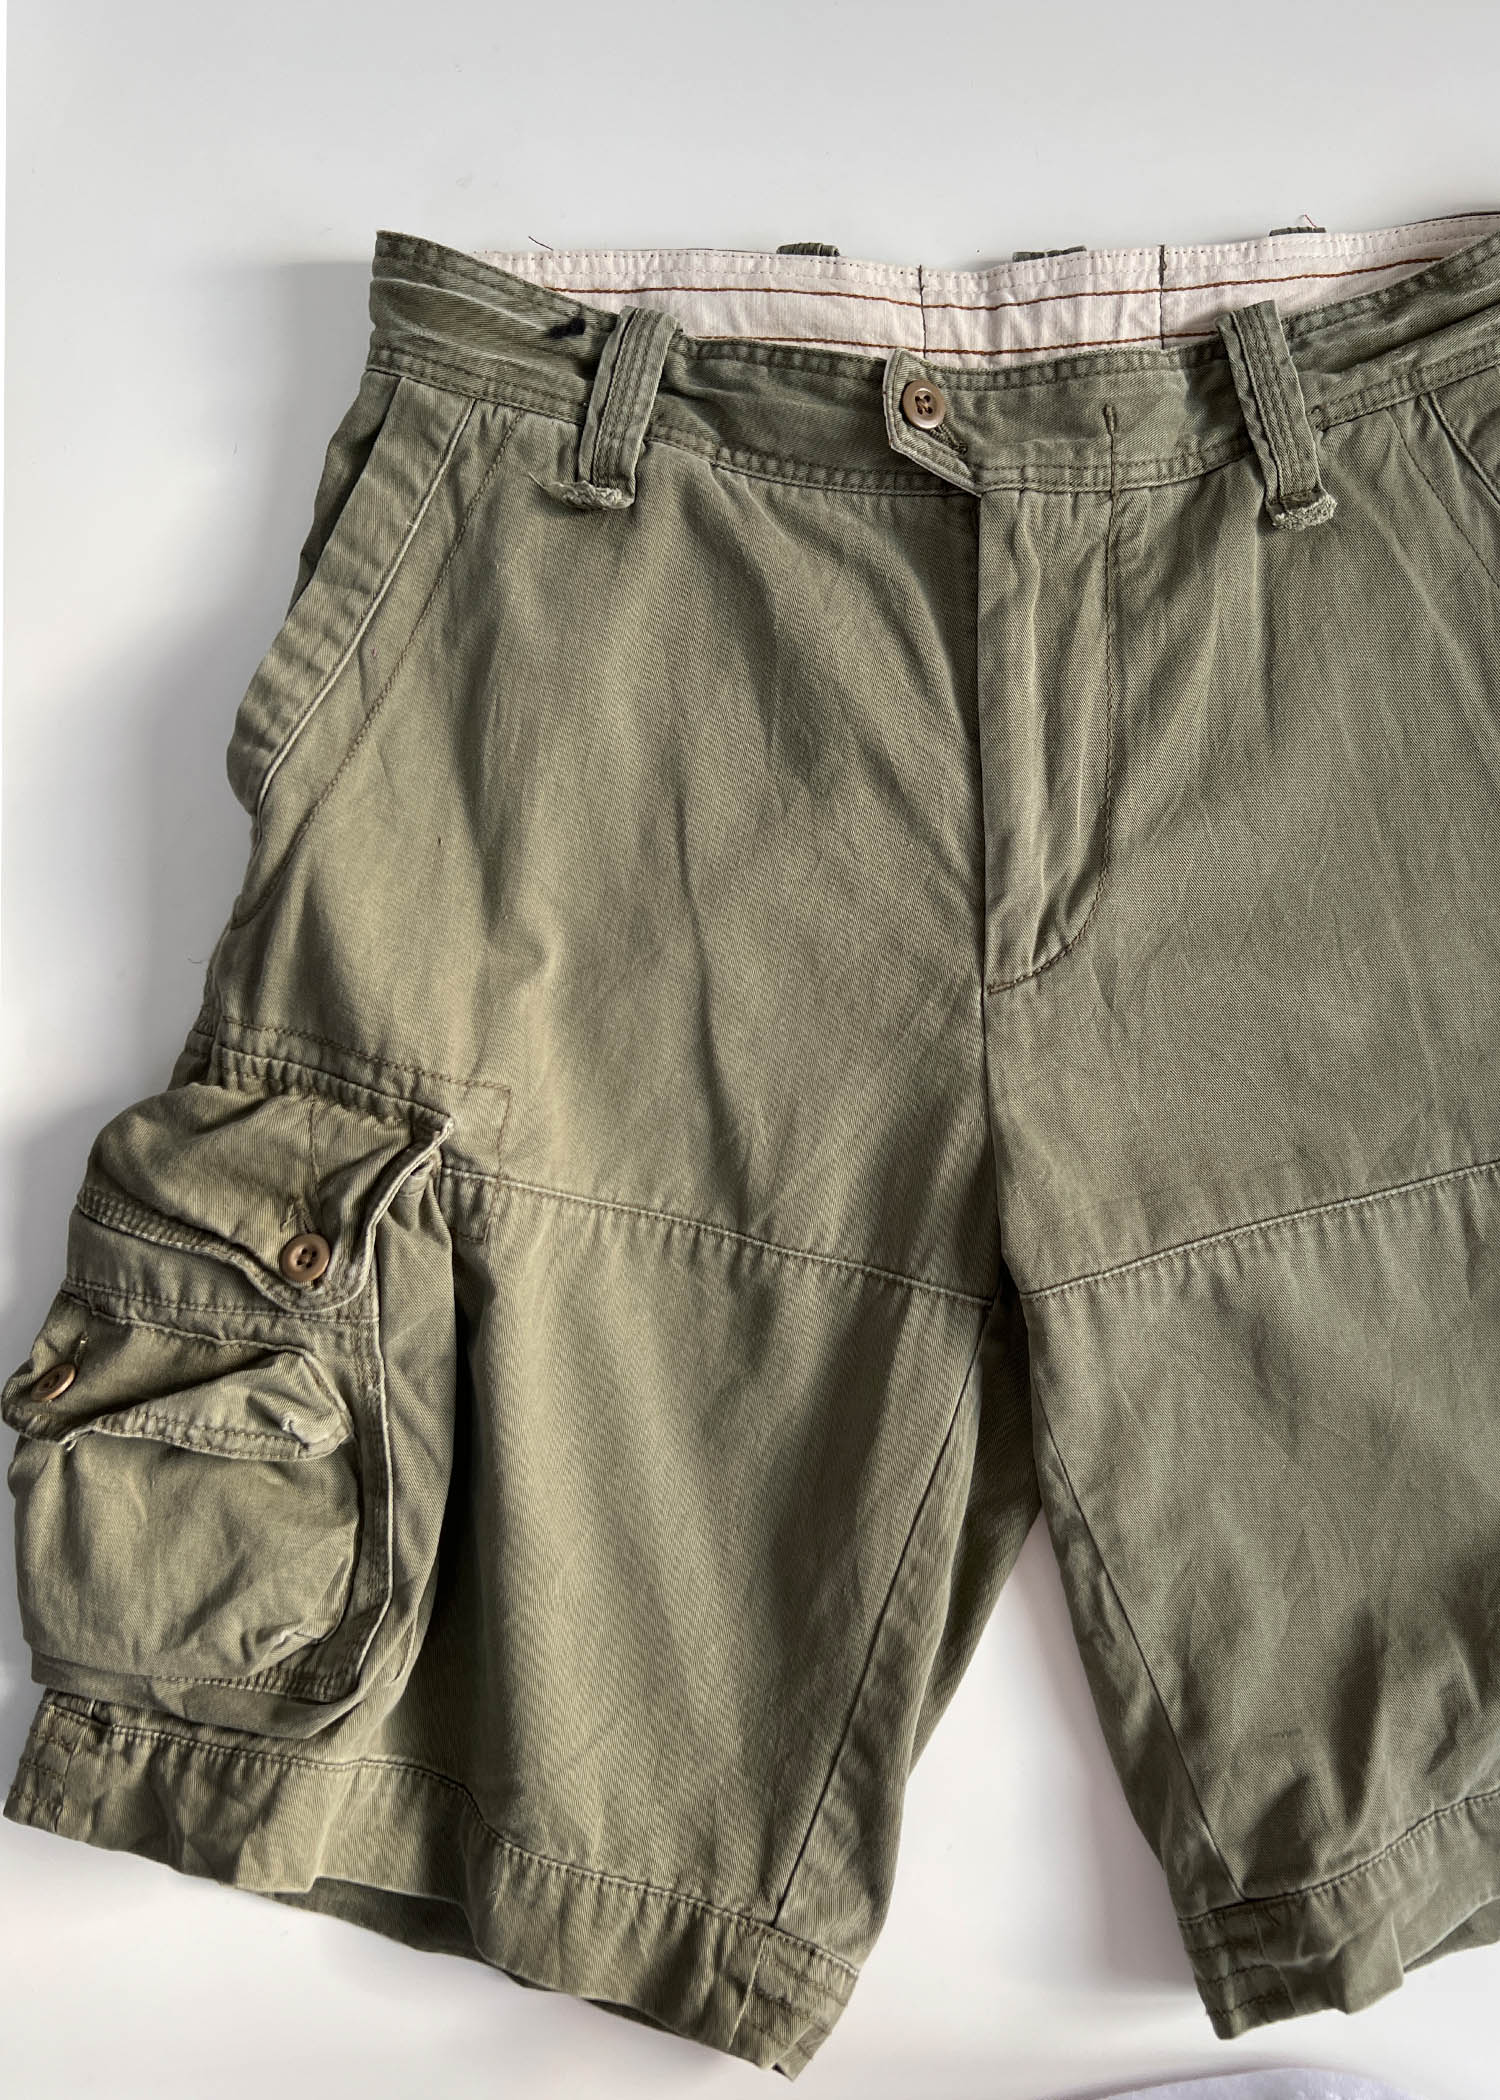 Polo by Ralph Lauren cargo shorts